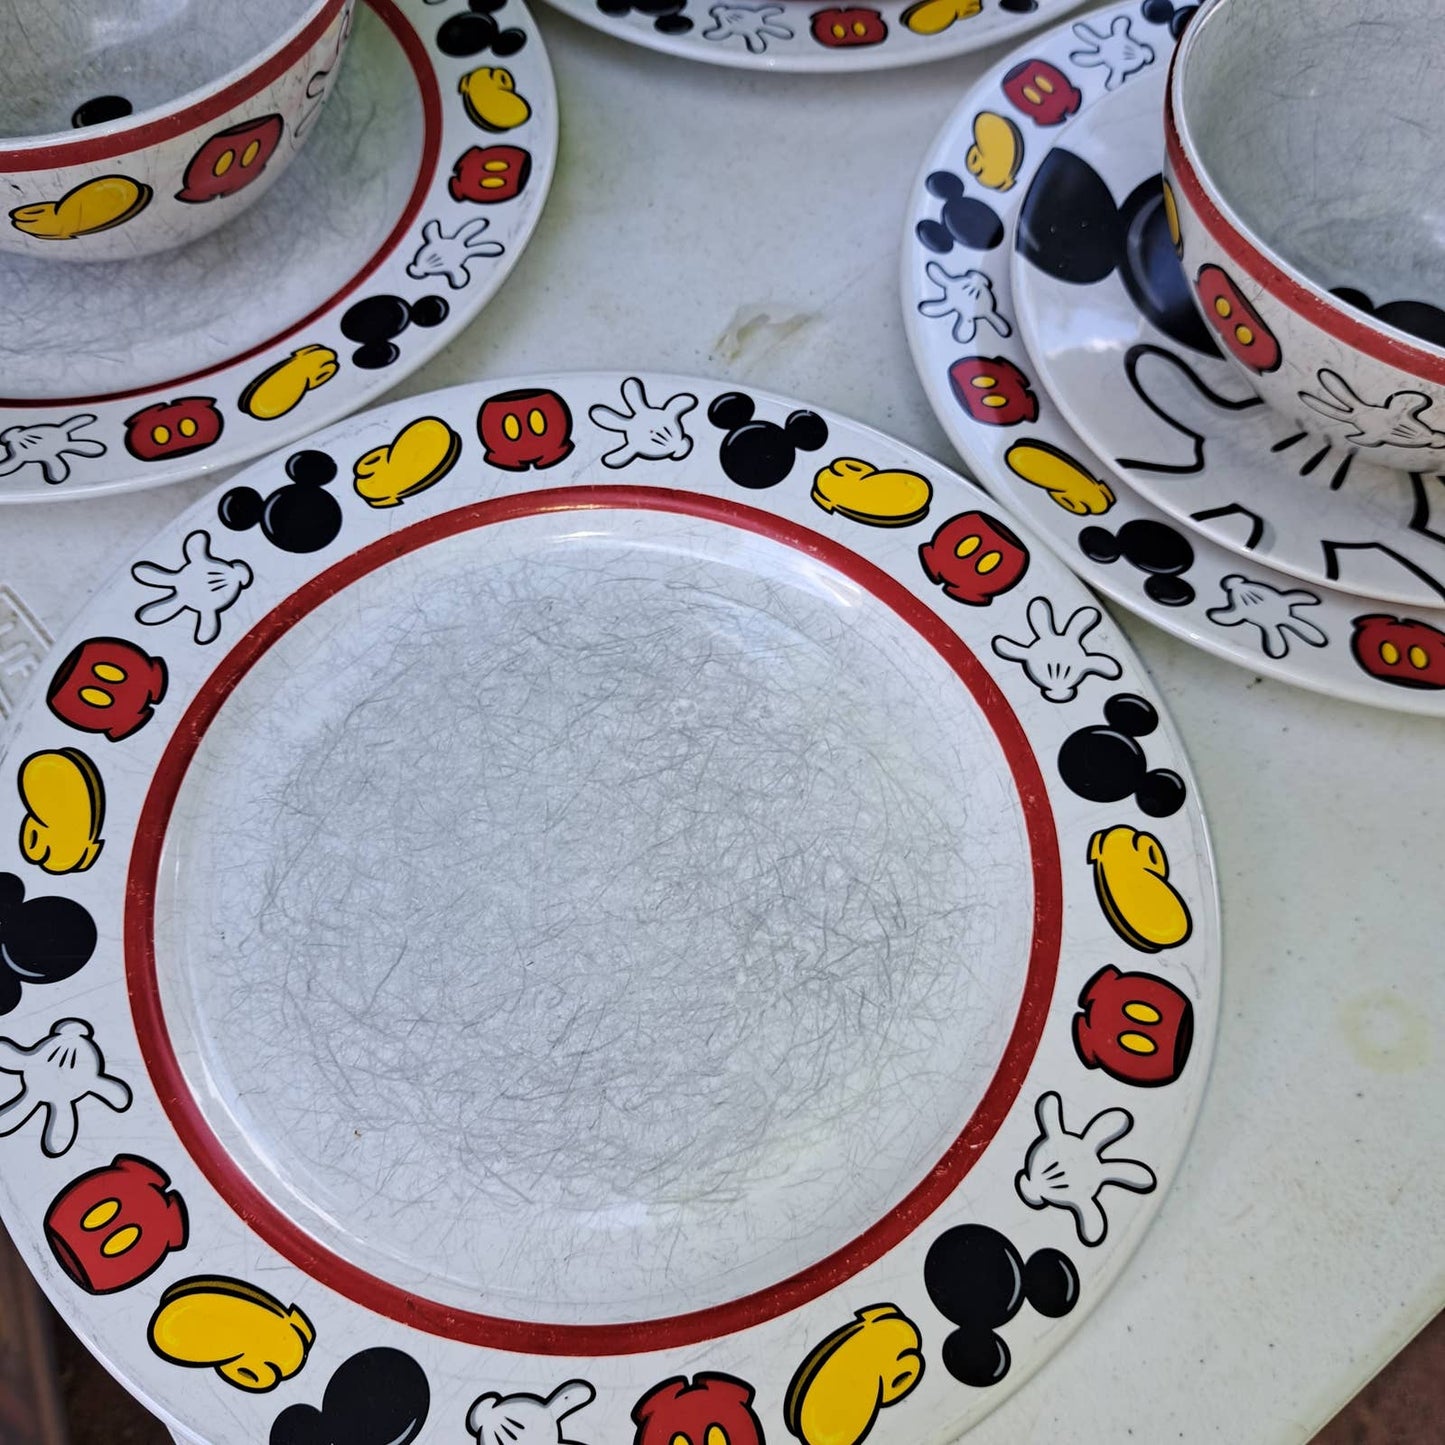 VERY RARE DISNEY Made in Thailand Heavy Ceramic Plates, Saucers, Bowl Set